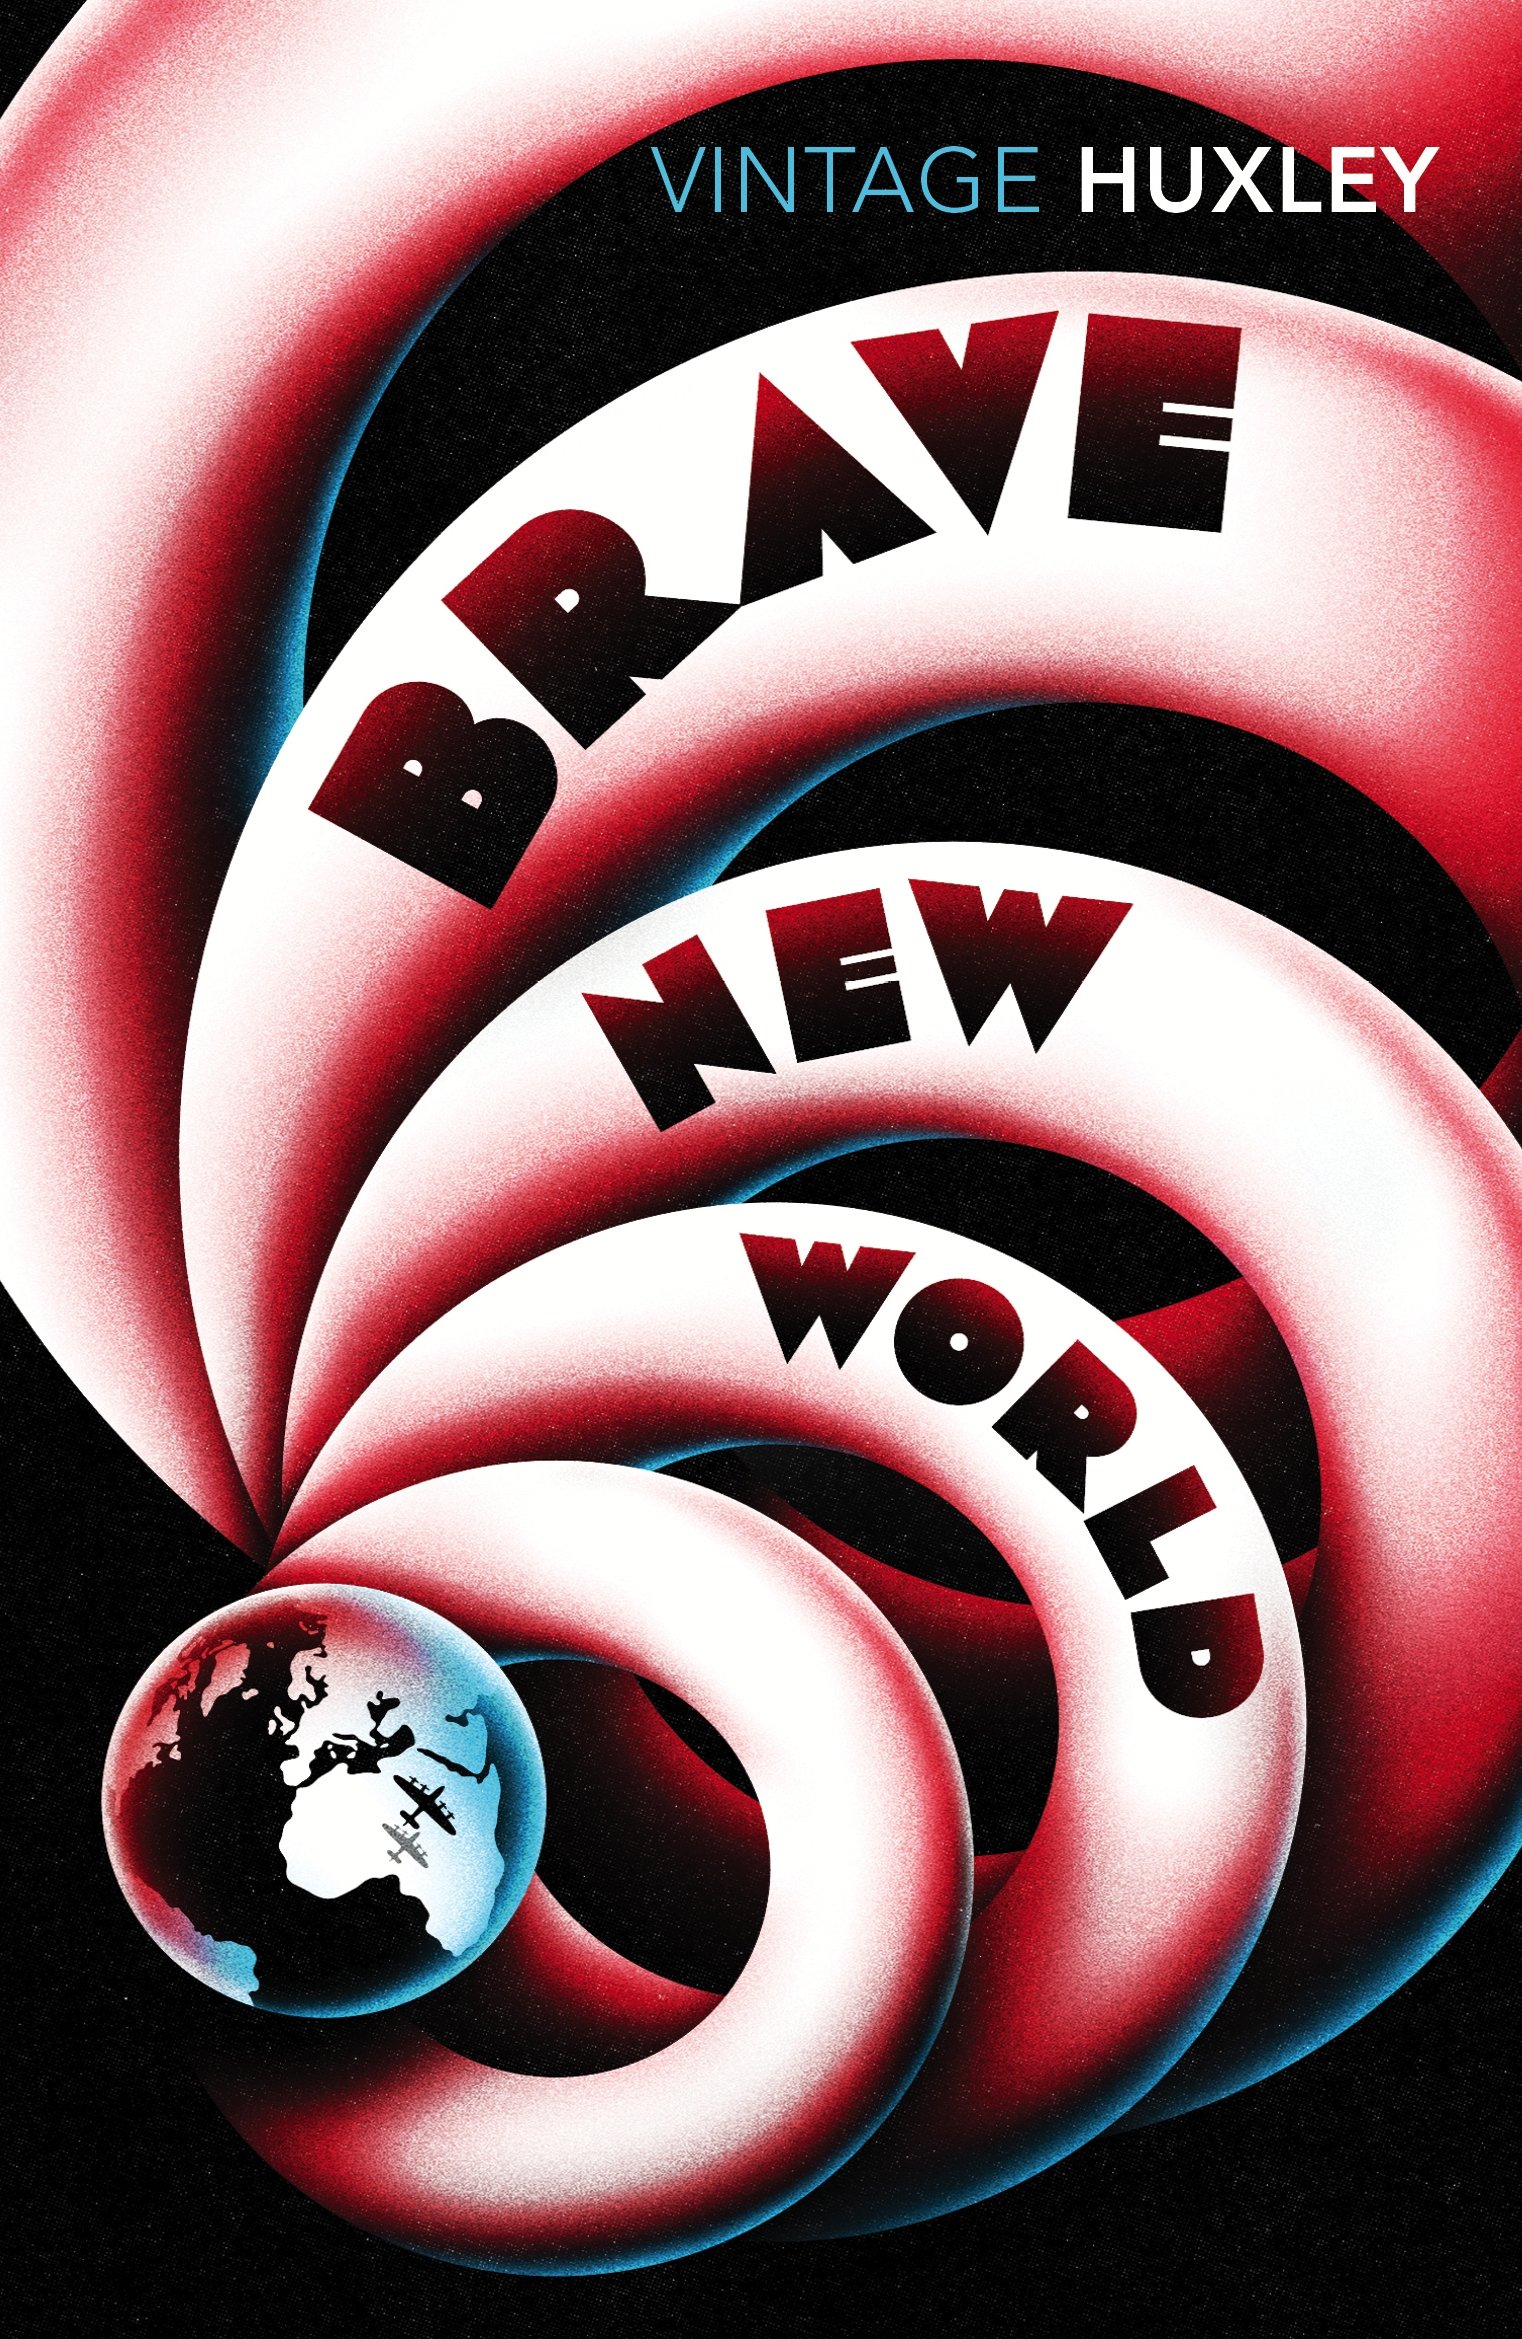 brave new world propaganda essay